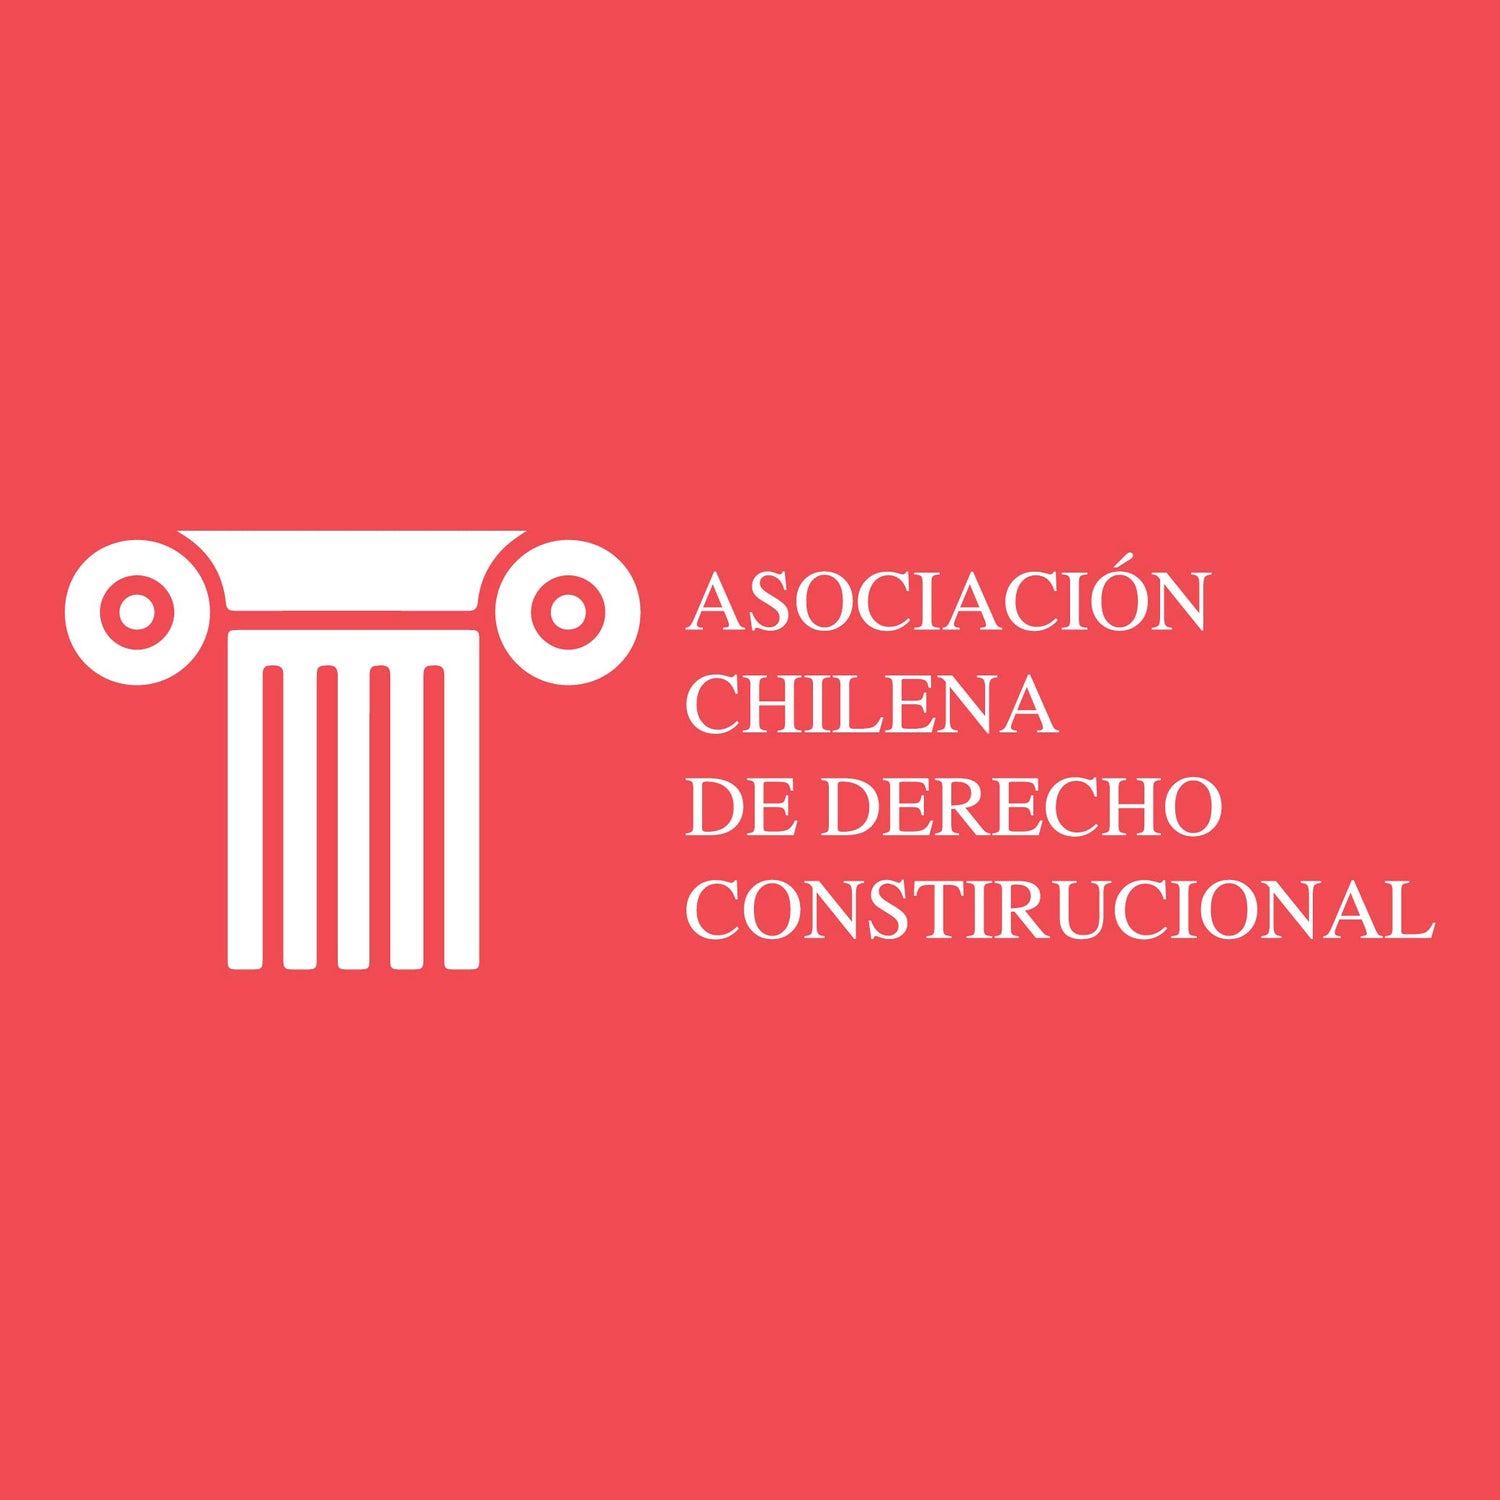 Asociación Chilena de Derecho constitucional